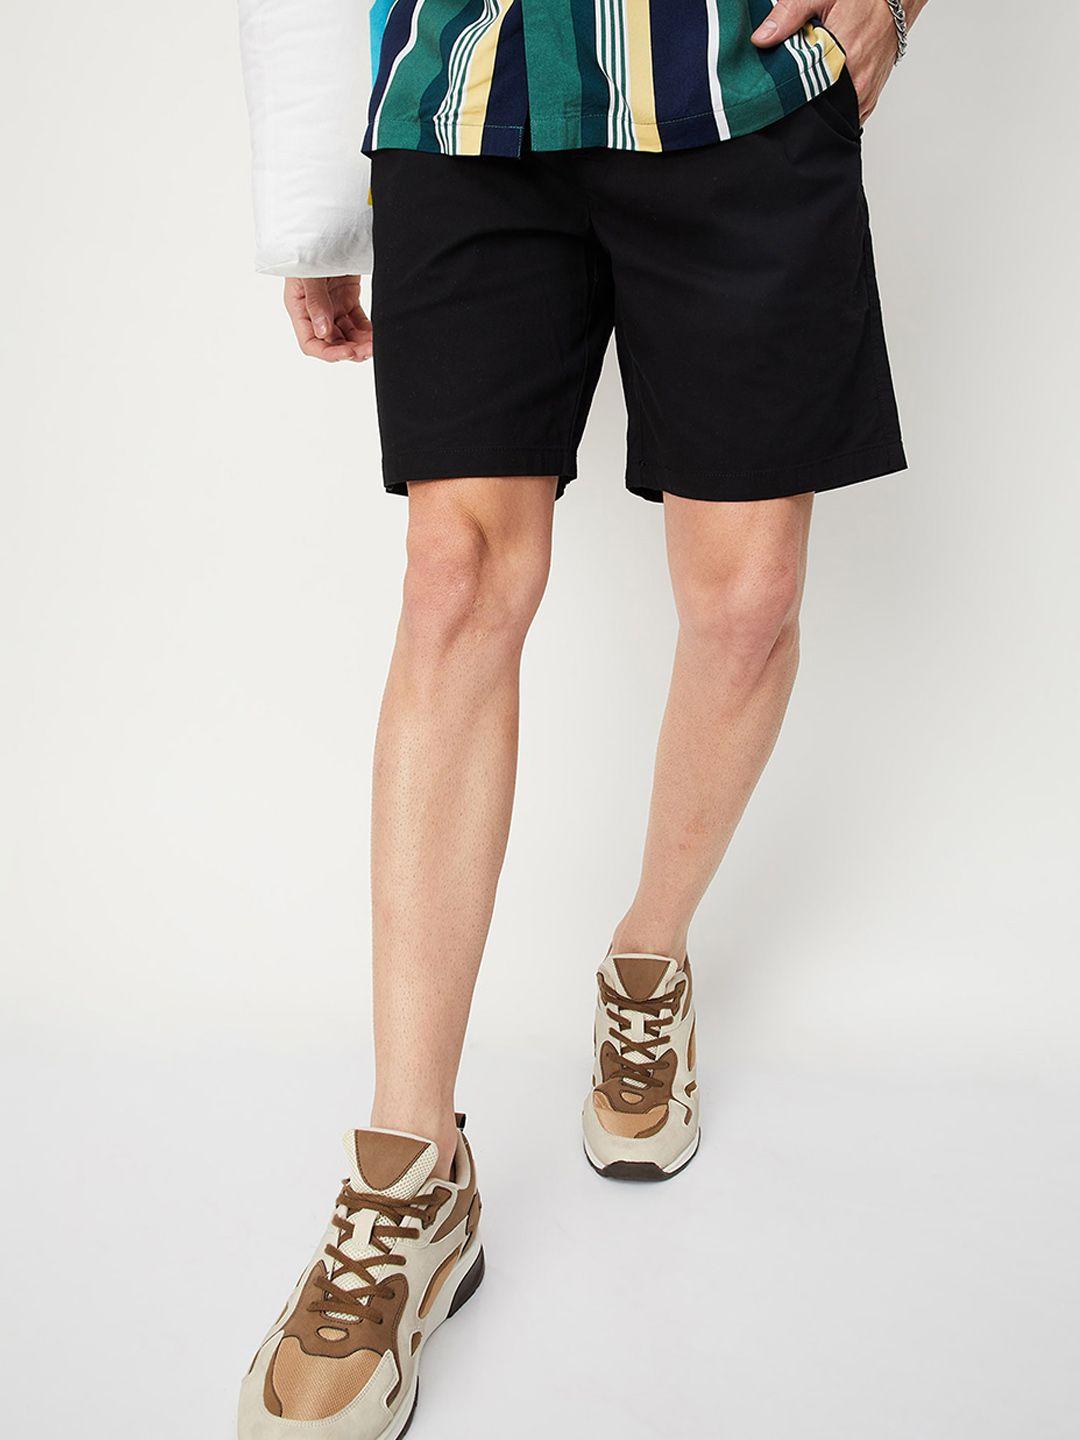 max-men-solid-mid-rise-regular-shorts